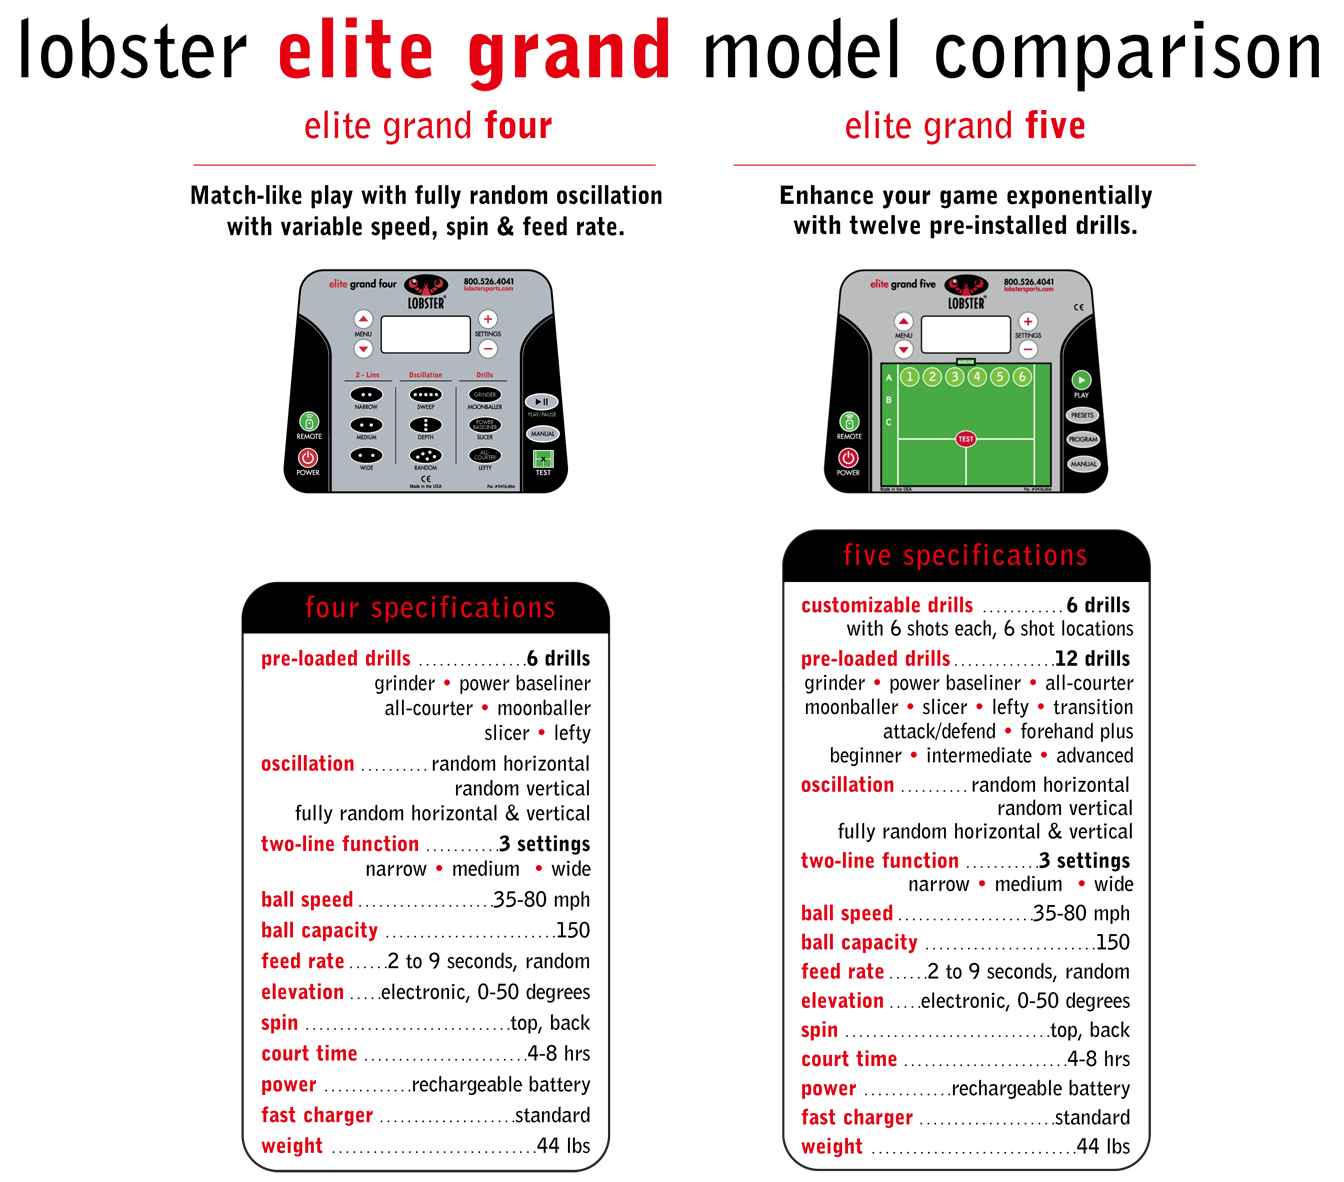 lob-model-comparison-elitegrand-2.png